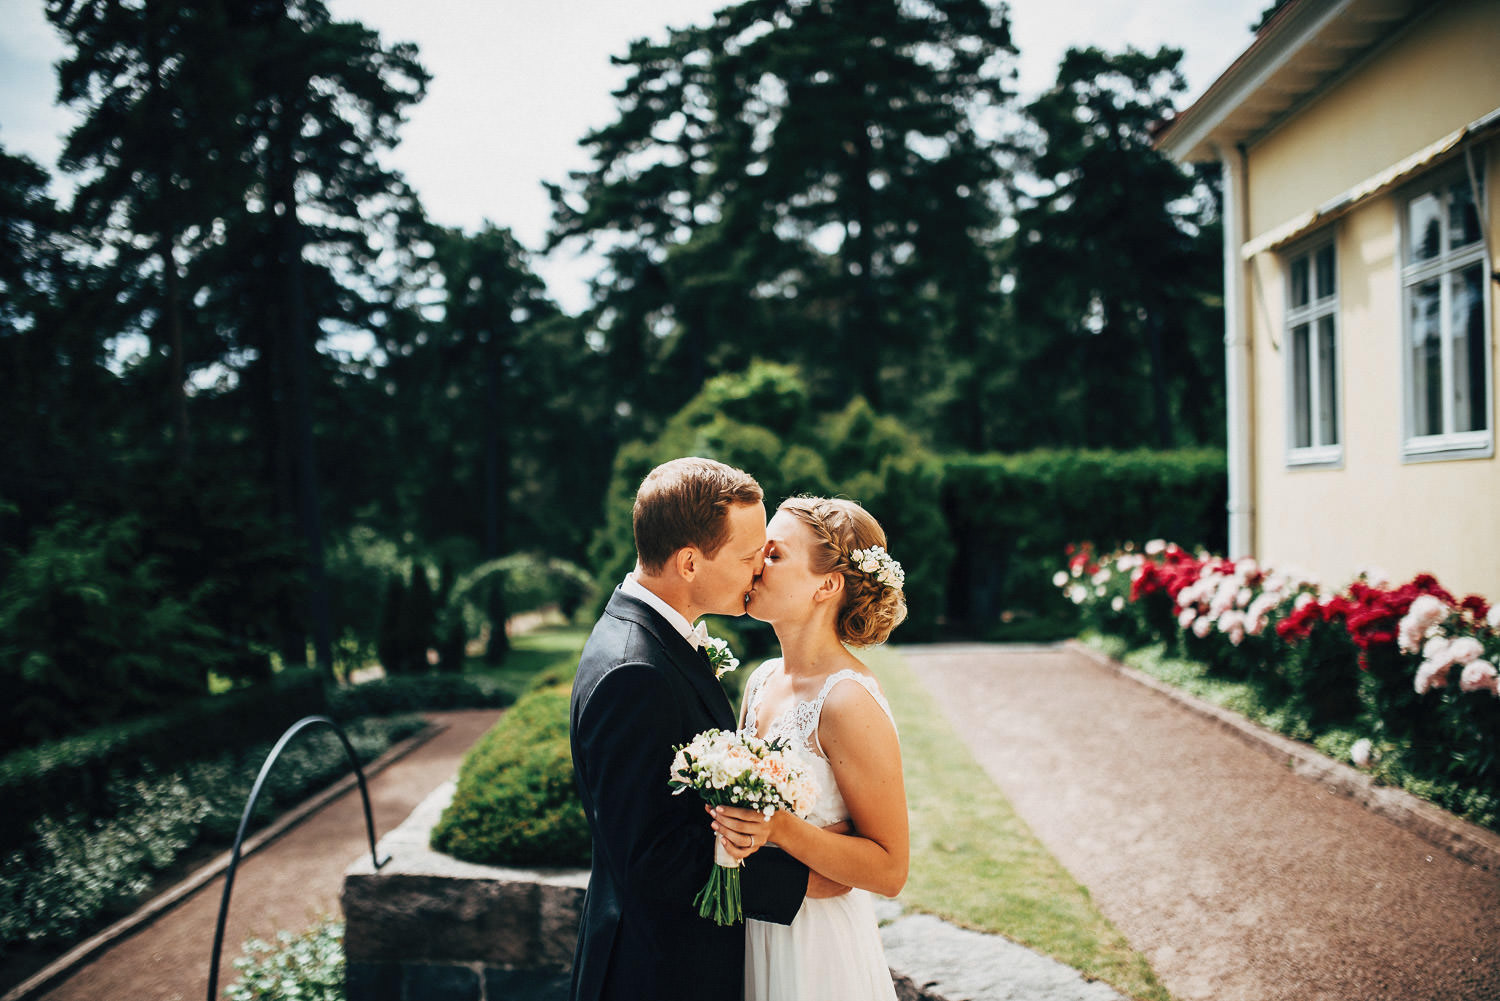 jere-satamo_valokuvaaja-turku_destination-wedding-photographer-finland-017.jpg